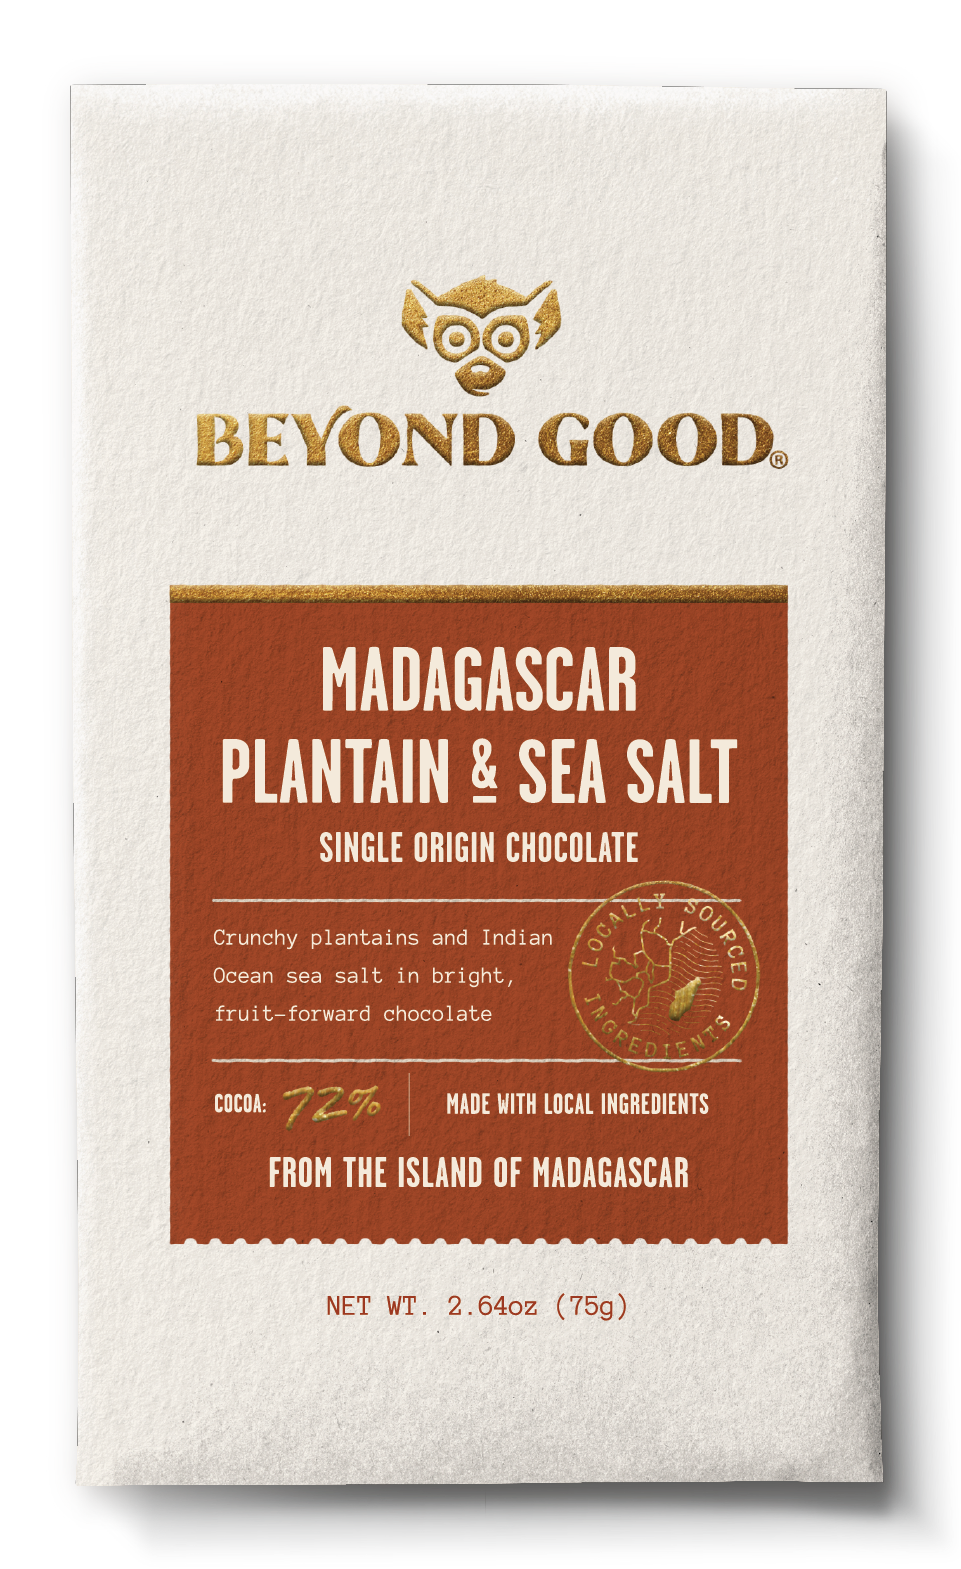 Madagascar Plantain & Sea Salt: Small Batch Collection